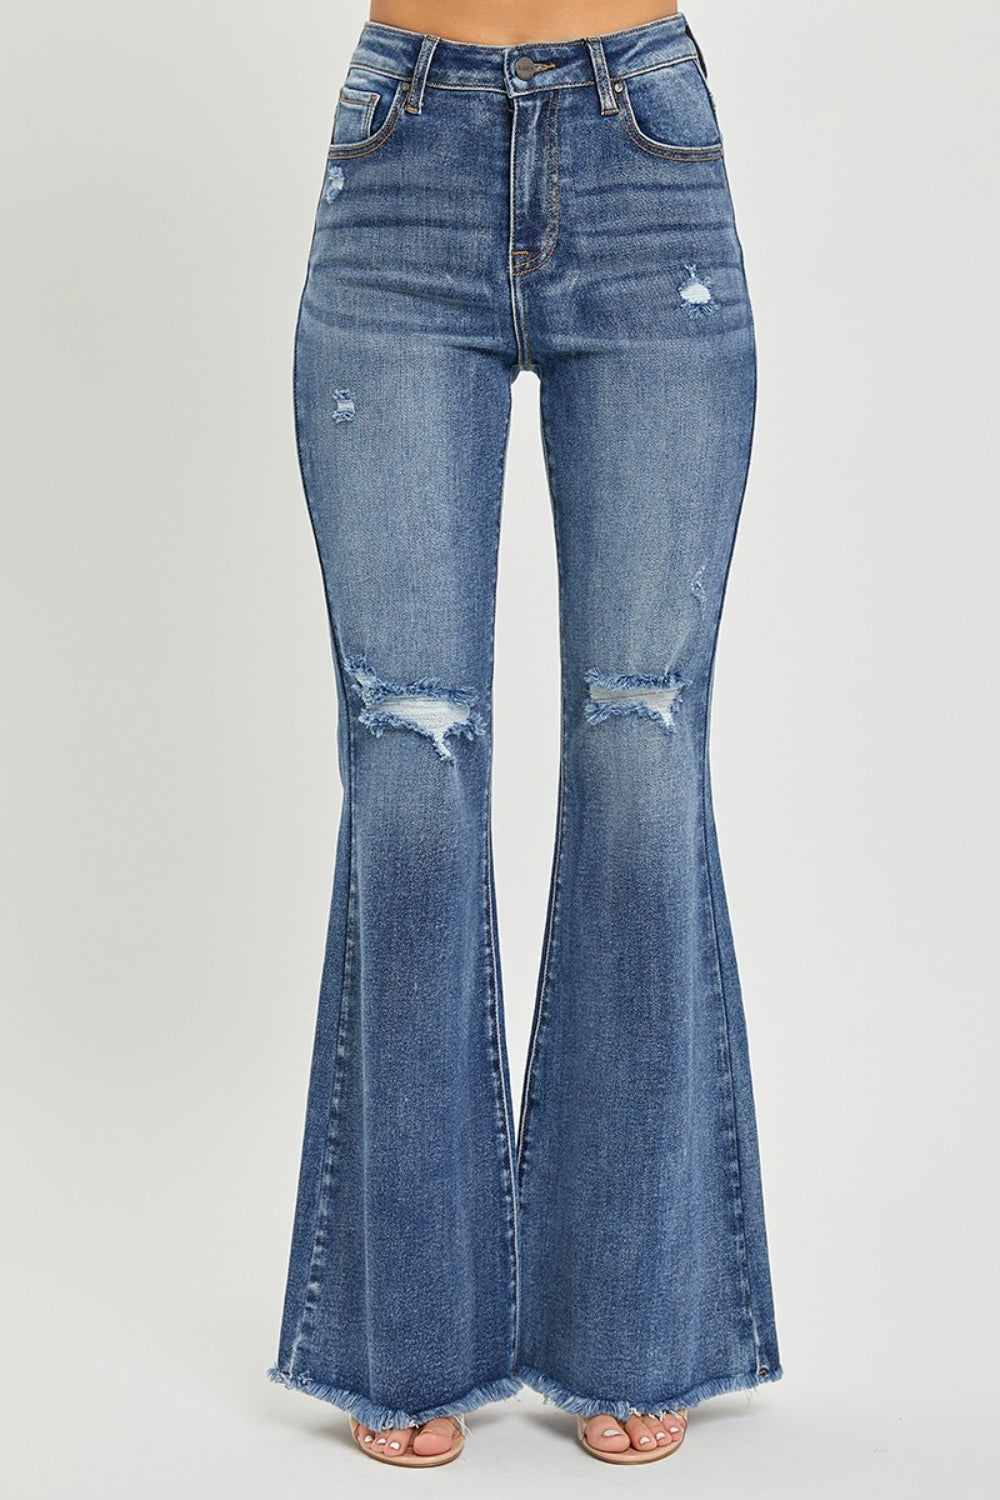 Medium Wash High Waist Distressed Flare Jeans